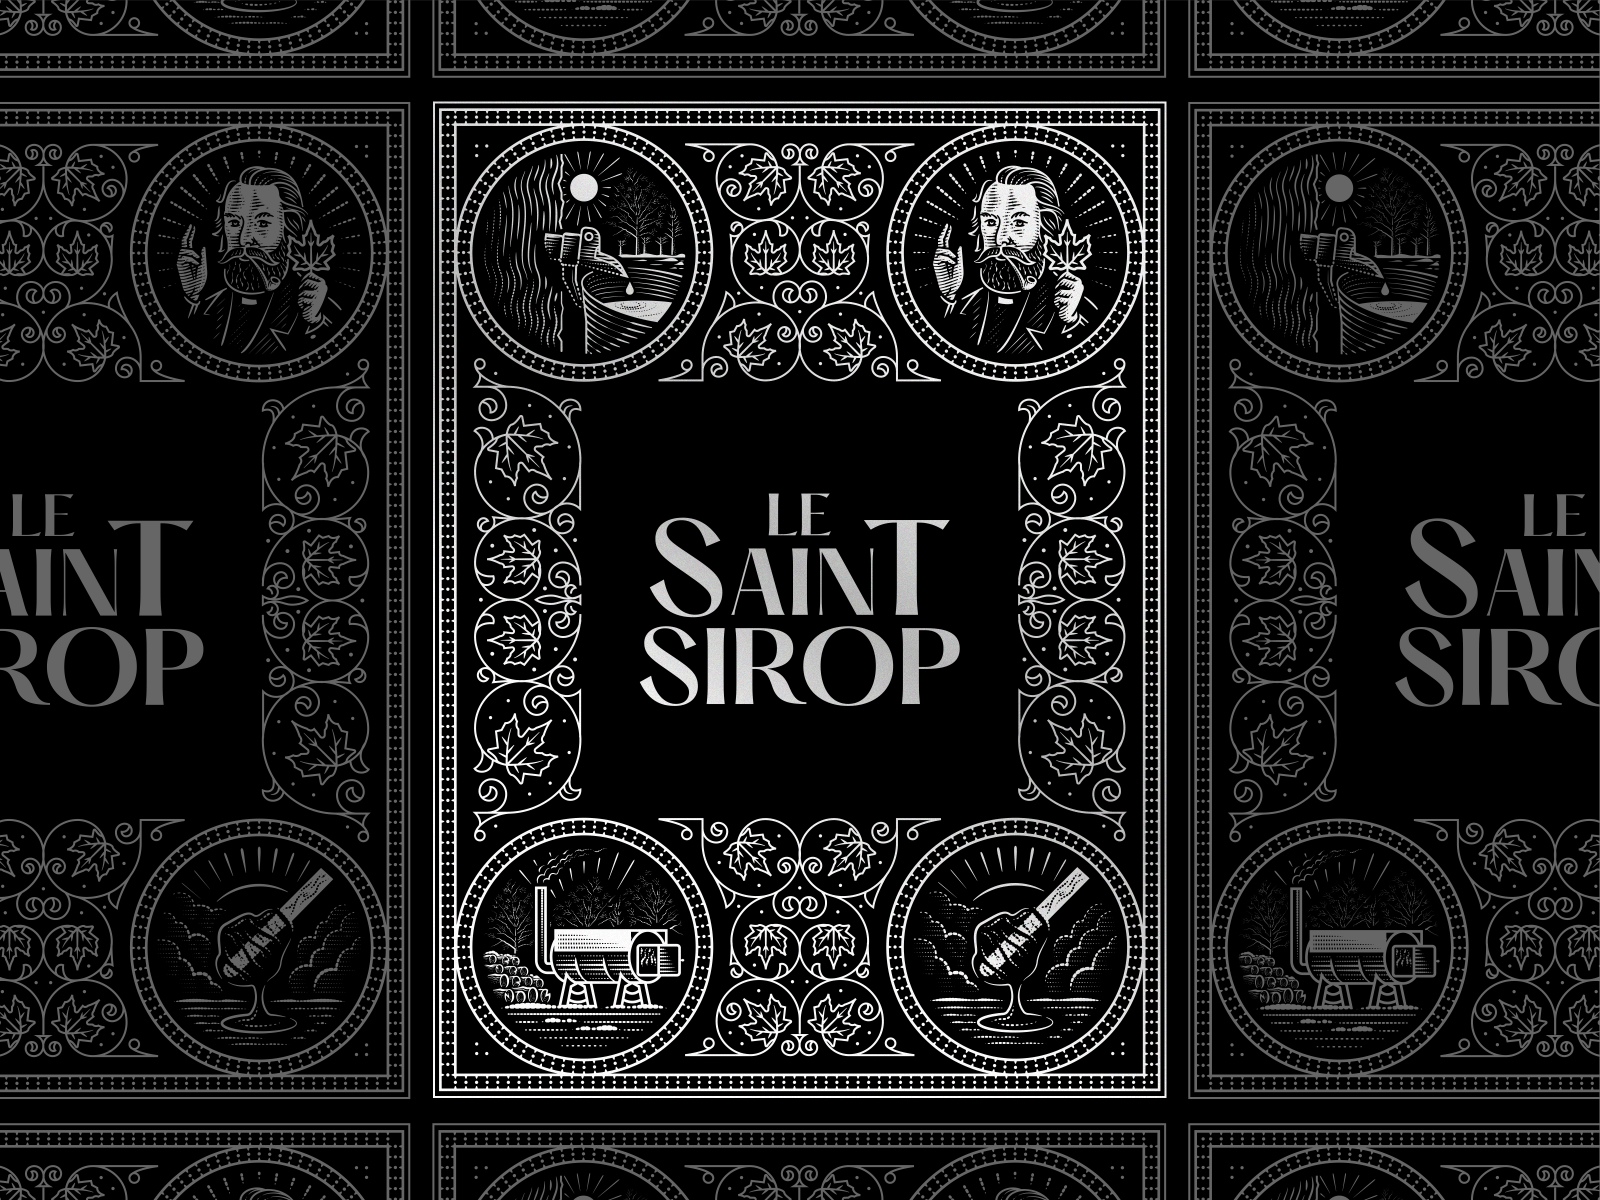 Le Saint Sirop packaging woodcut line art graphic design etching illustrator peter voth design engraving illustration